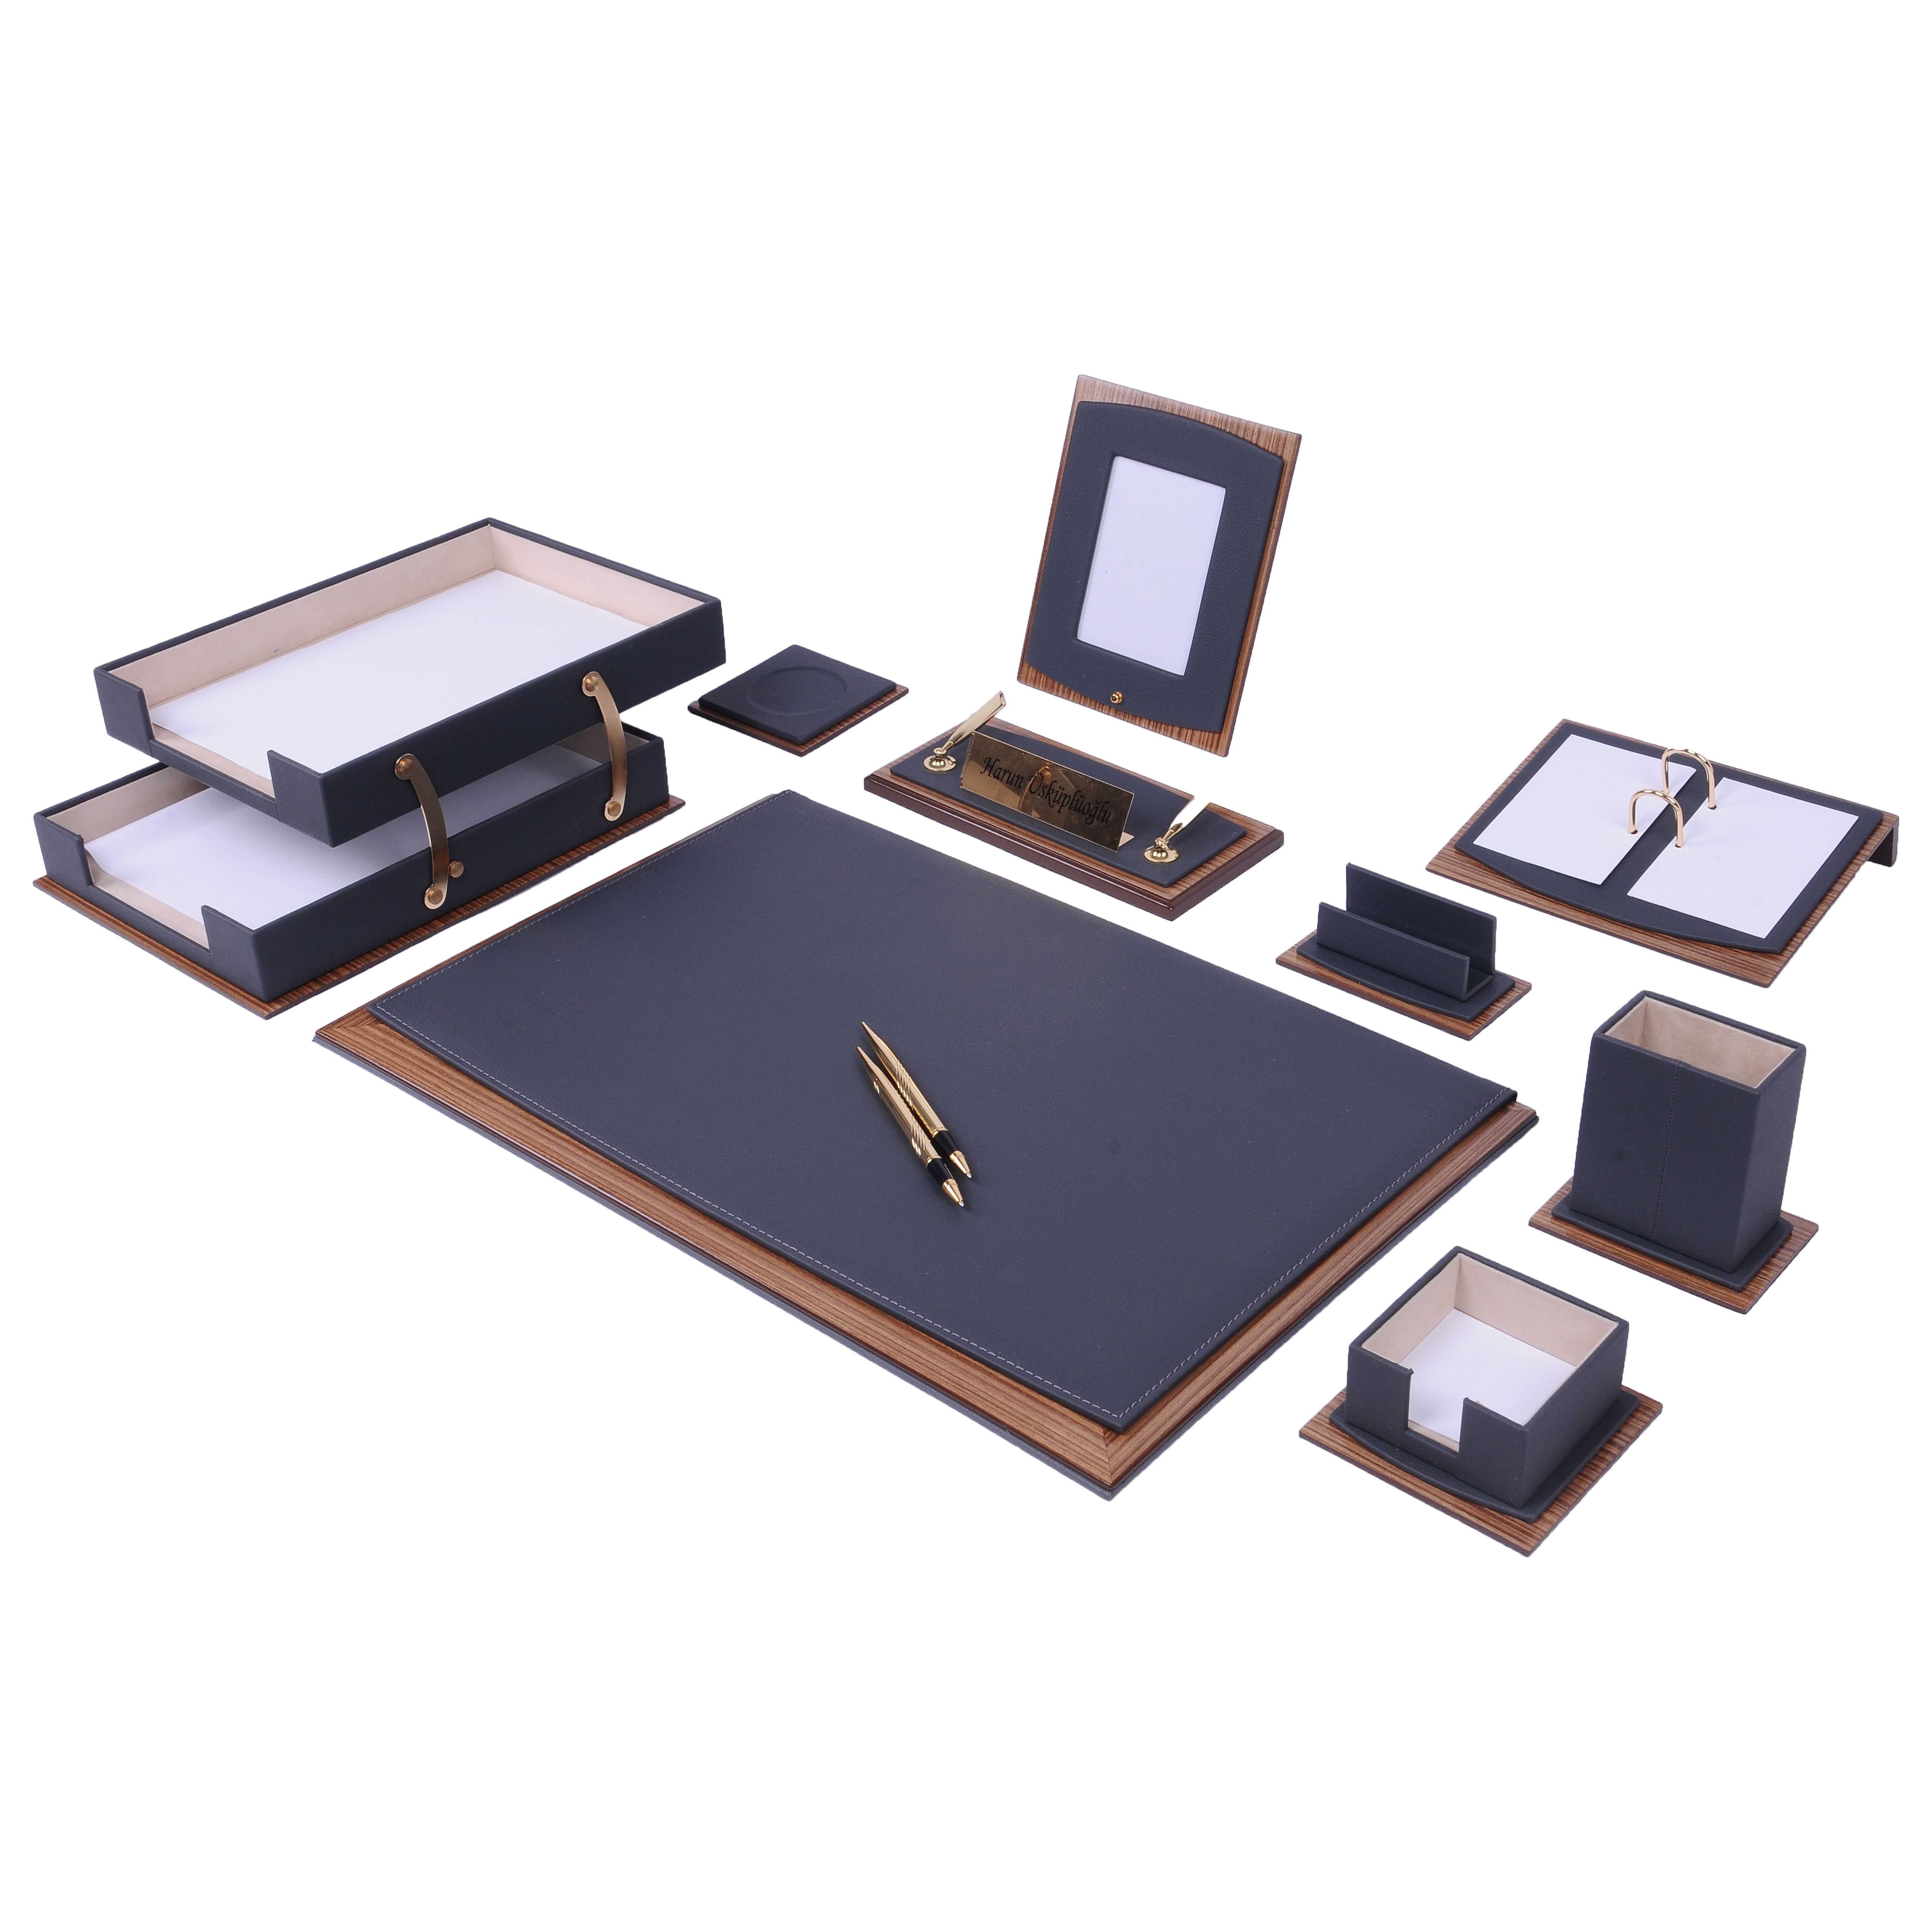 Leather Desk Set - Leather Organizer Desk Set - Walnut Wood Desk Set -  Office Product - Desk Accessories Set - 11 PCS (Gray) 